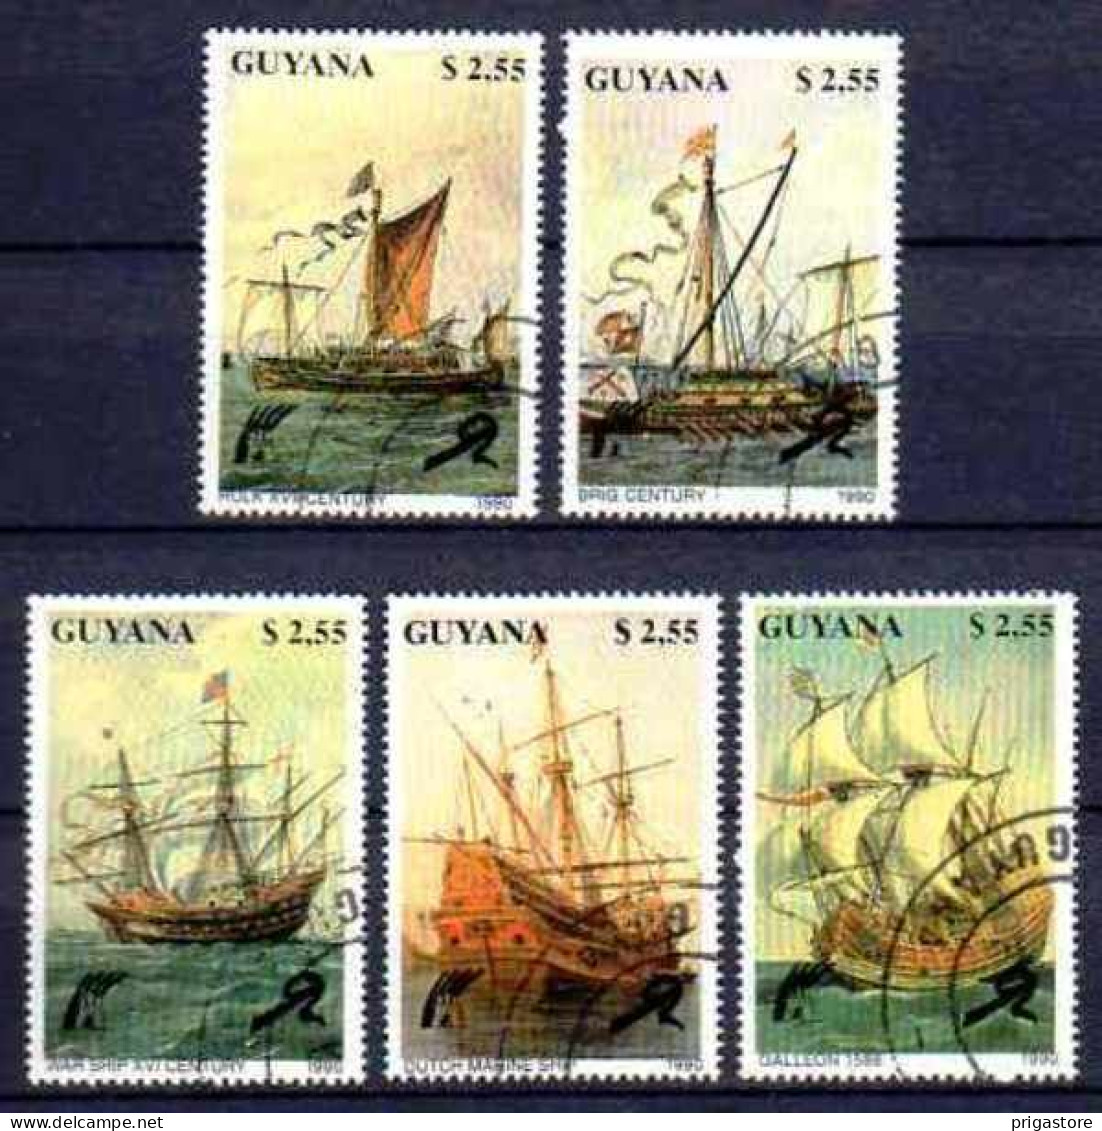 Guyana 1990 Bateaux Voiliers (33) Yvert N° 2359 à 2363 Oblitérés Used - Guyana (1966-...)